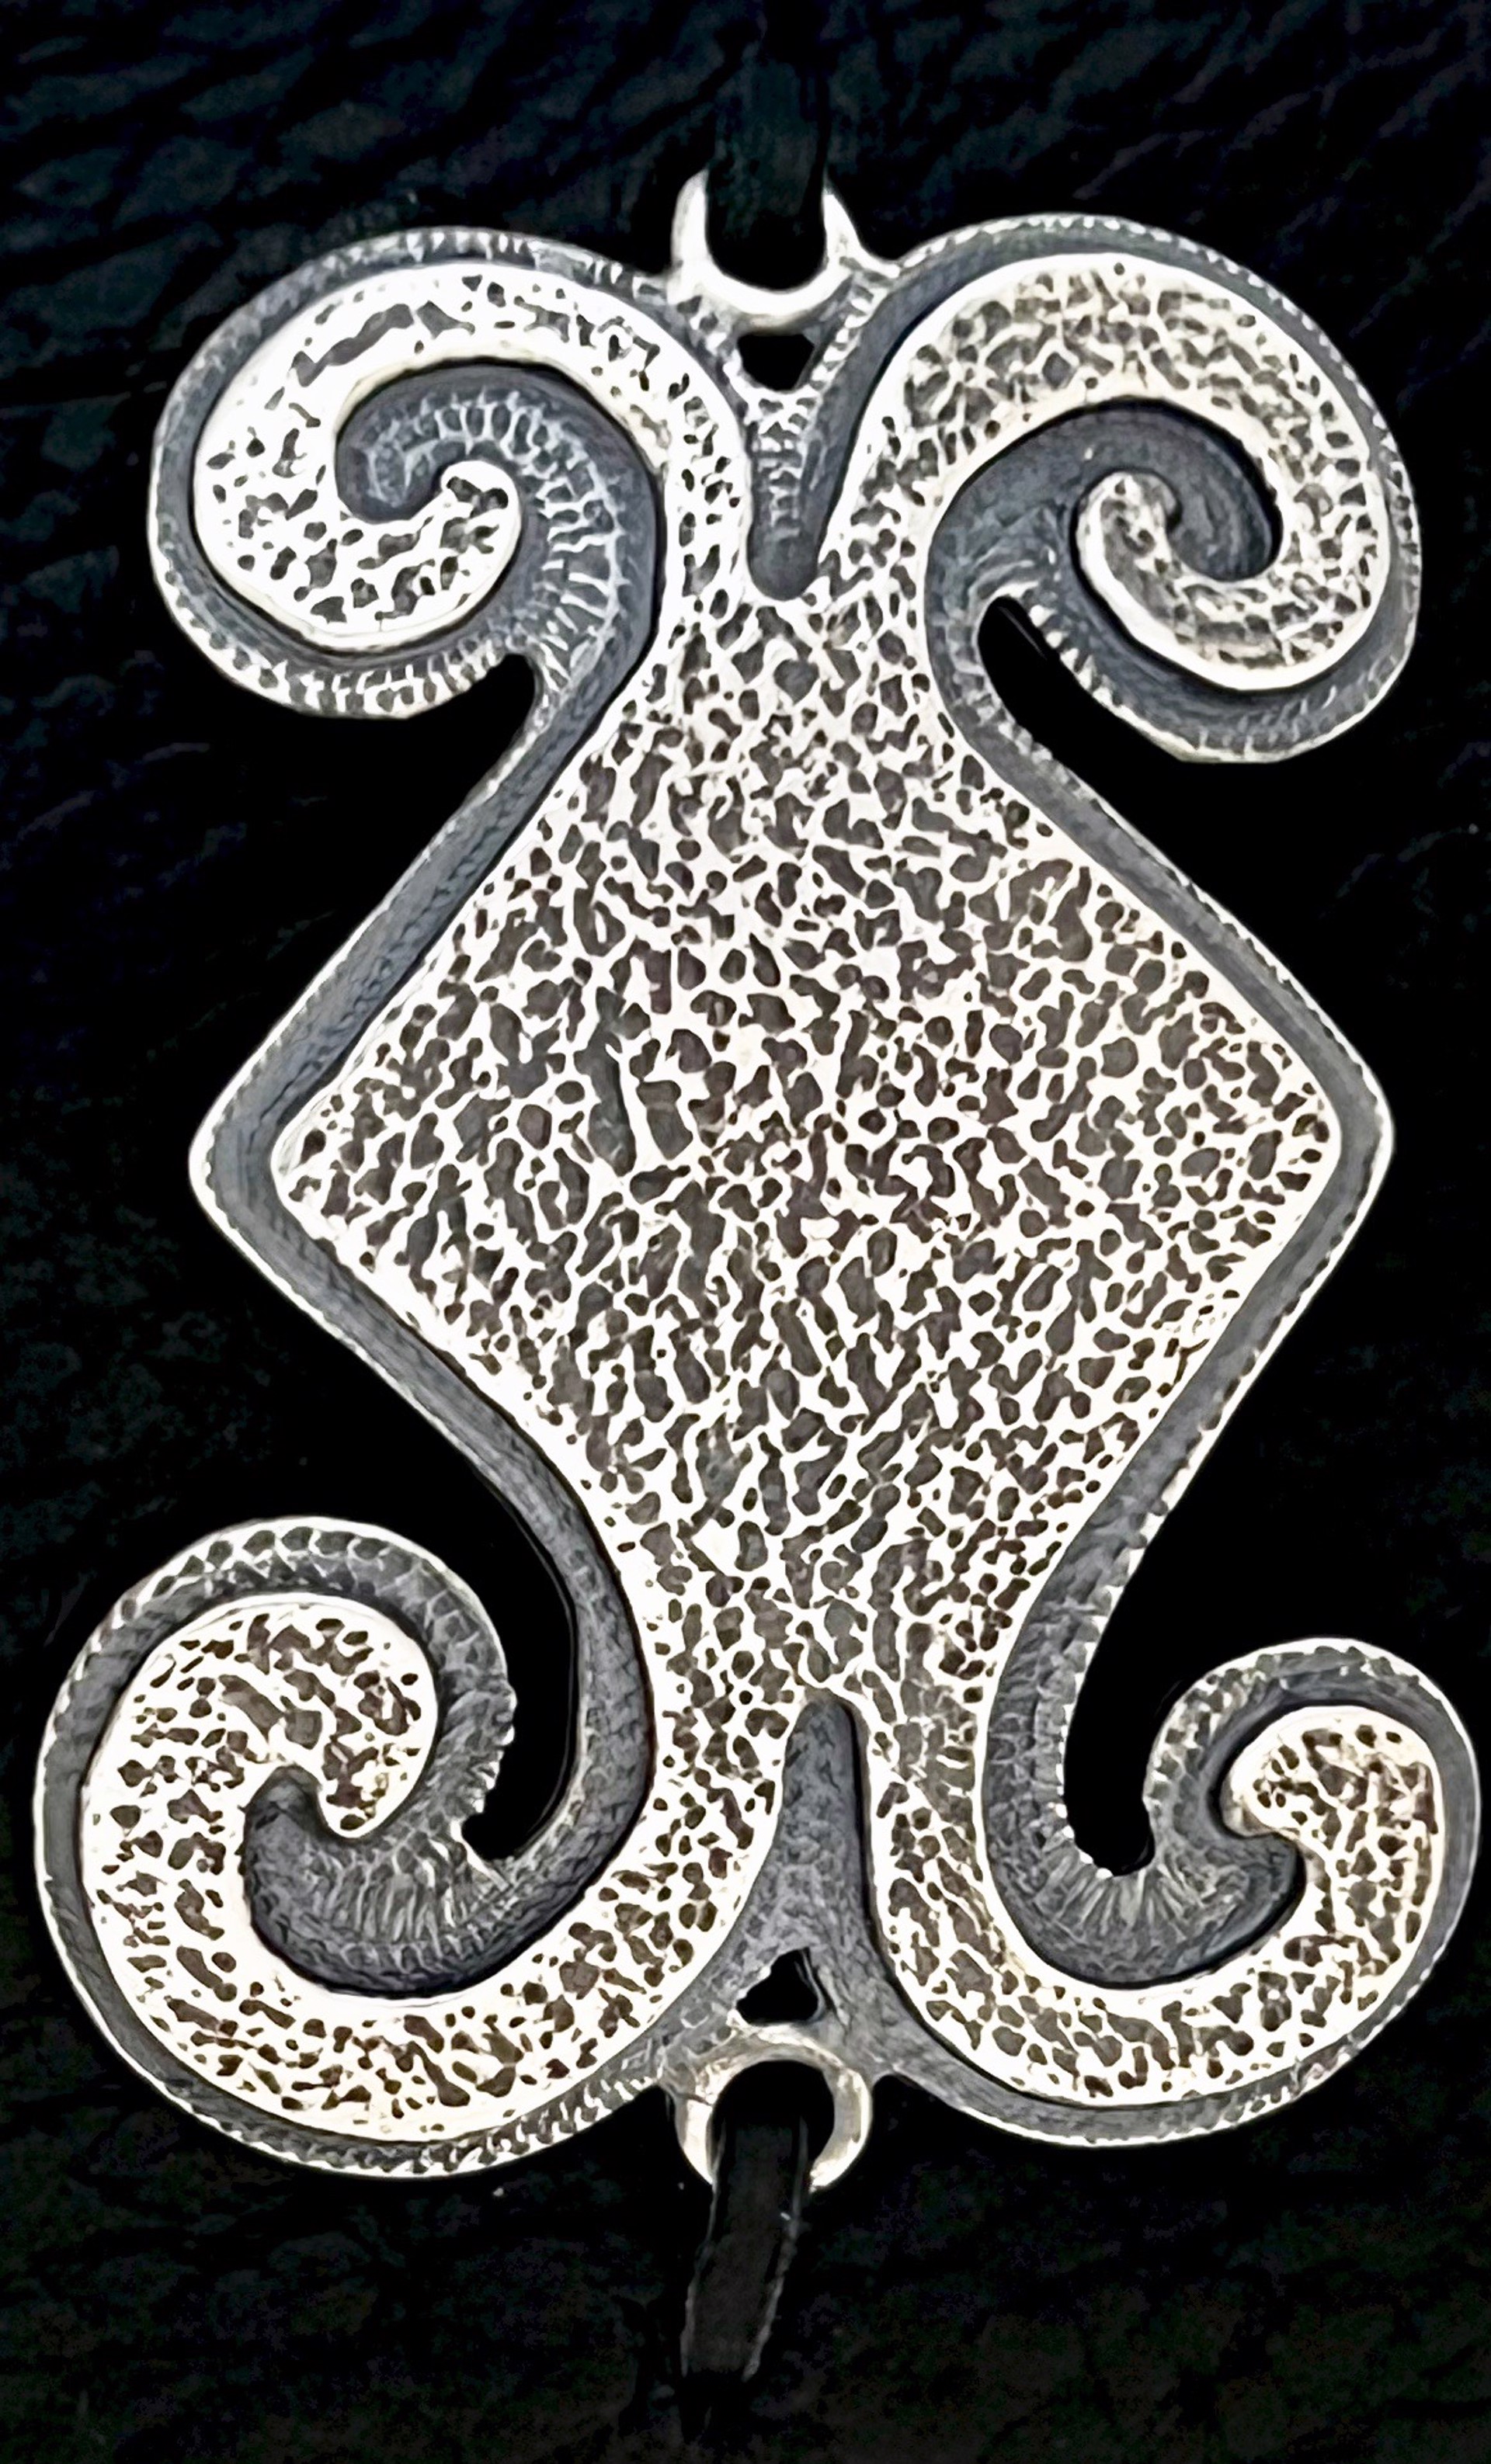 Hydra Contemporary pendant by Melanie A. Yazzie